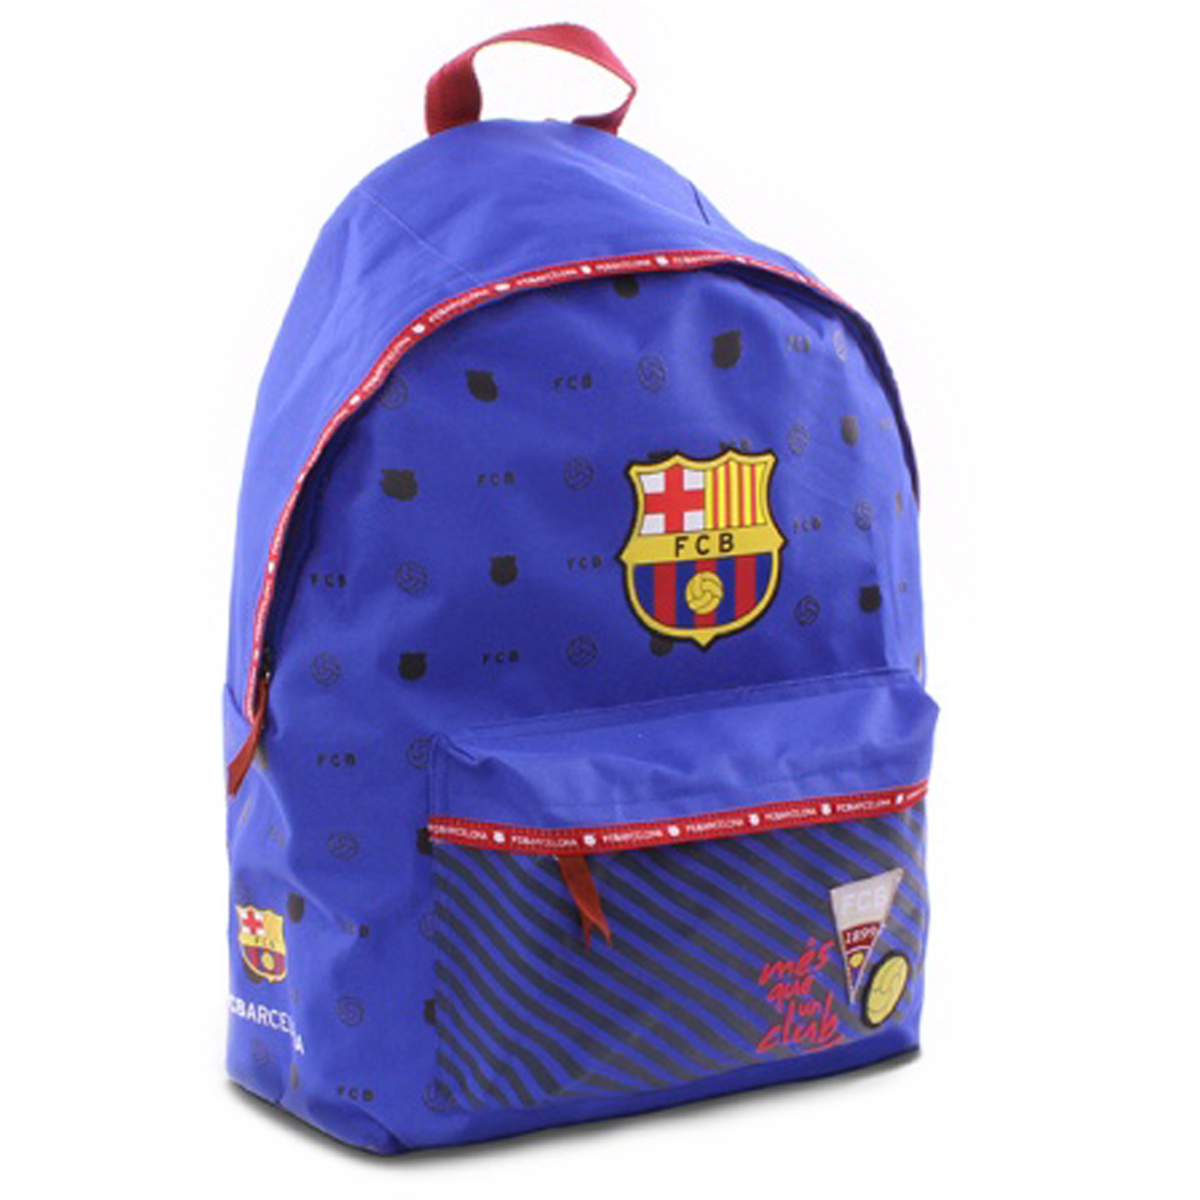 Sac à dos \'FC Barcelona\' bleu rouge - 40x30x14 cm - [Q7431]